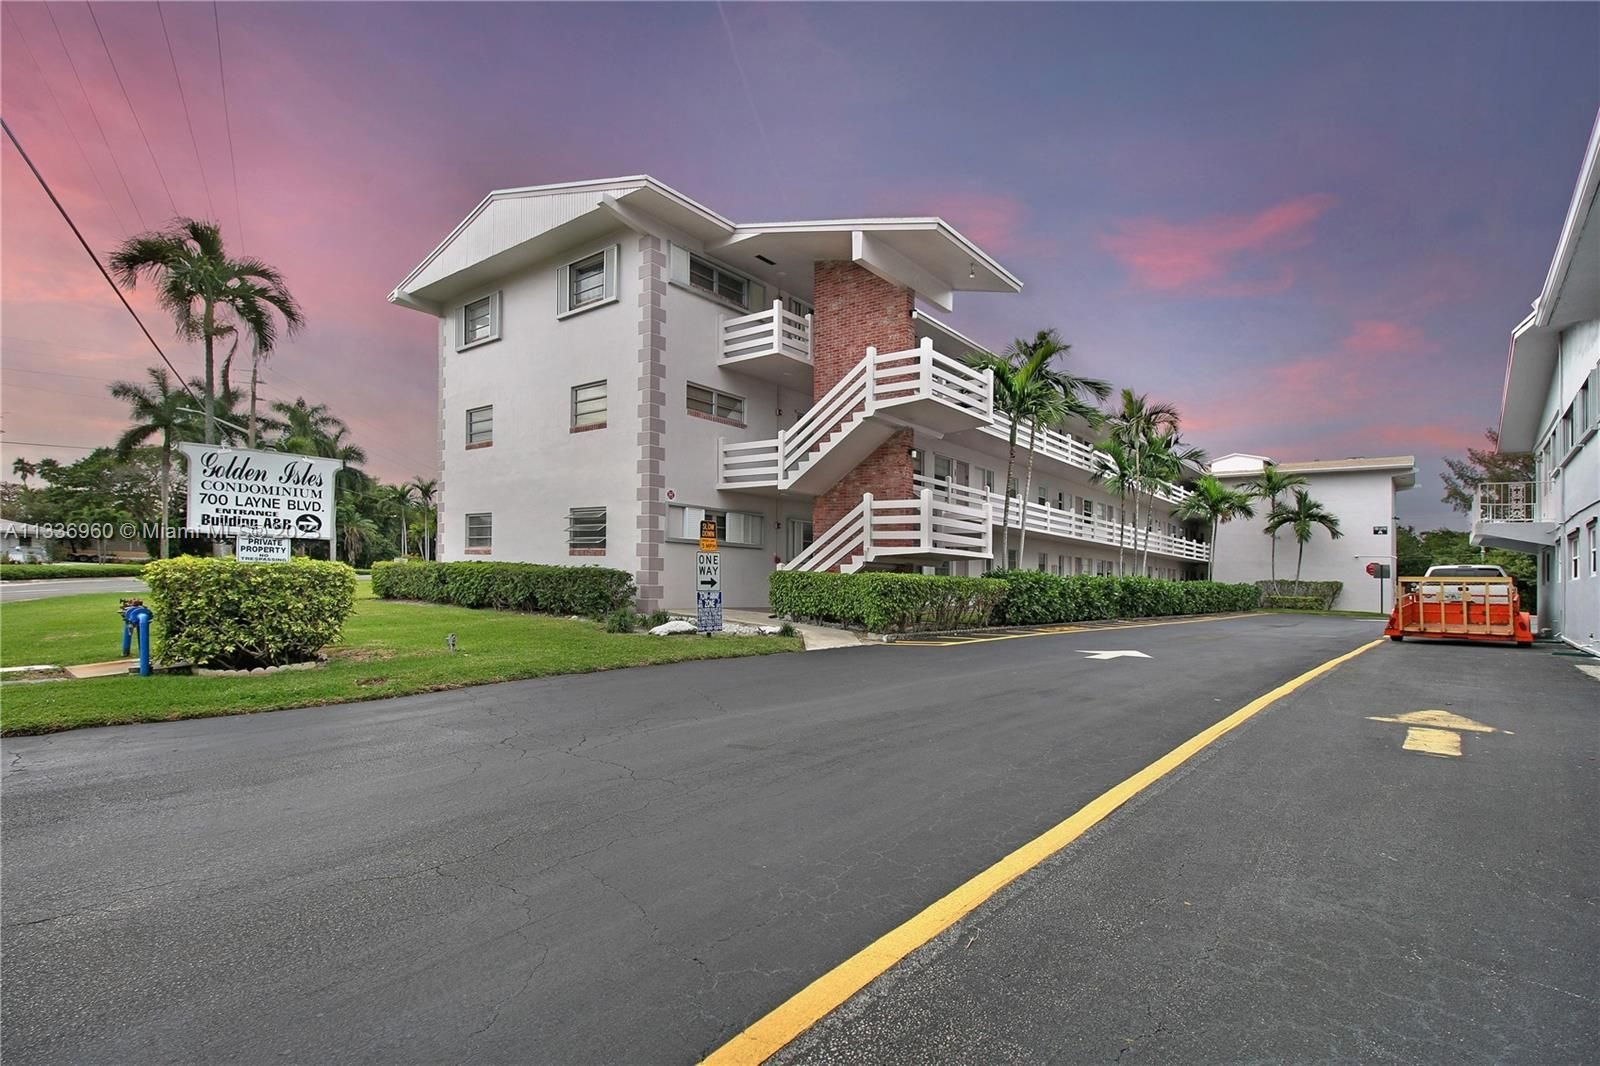 Real estate property located at 700 Layne Blvd #111, Broward County, Hallandale Beach, FL